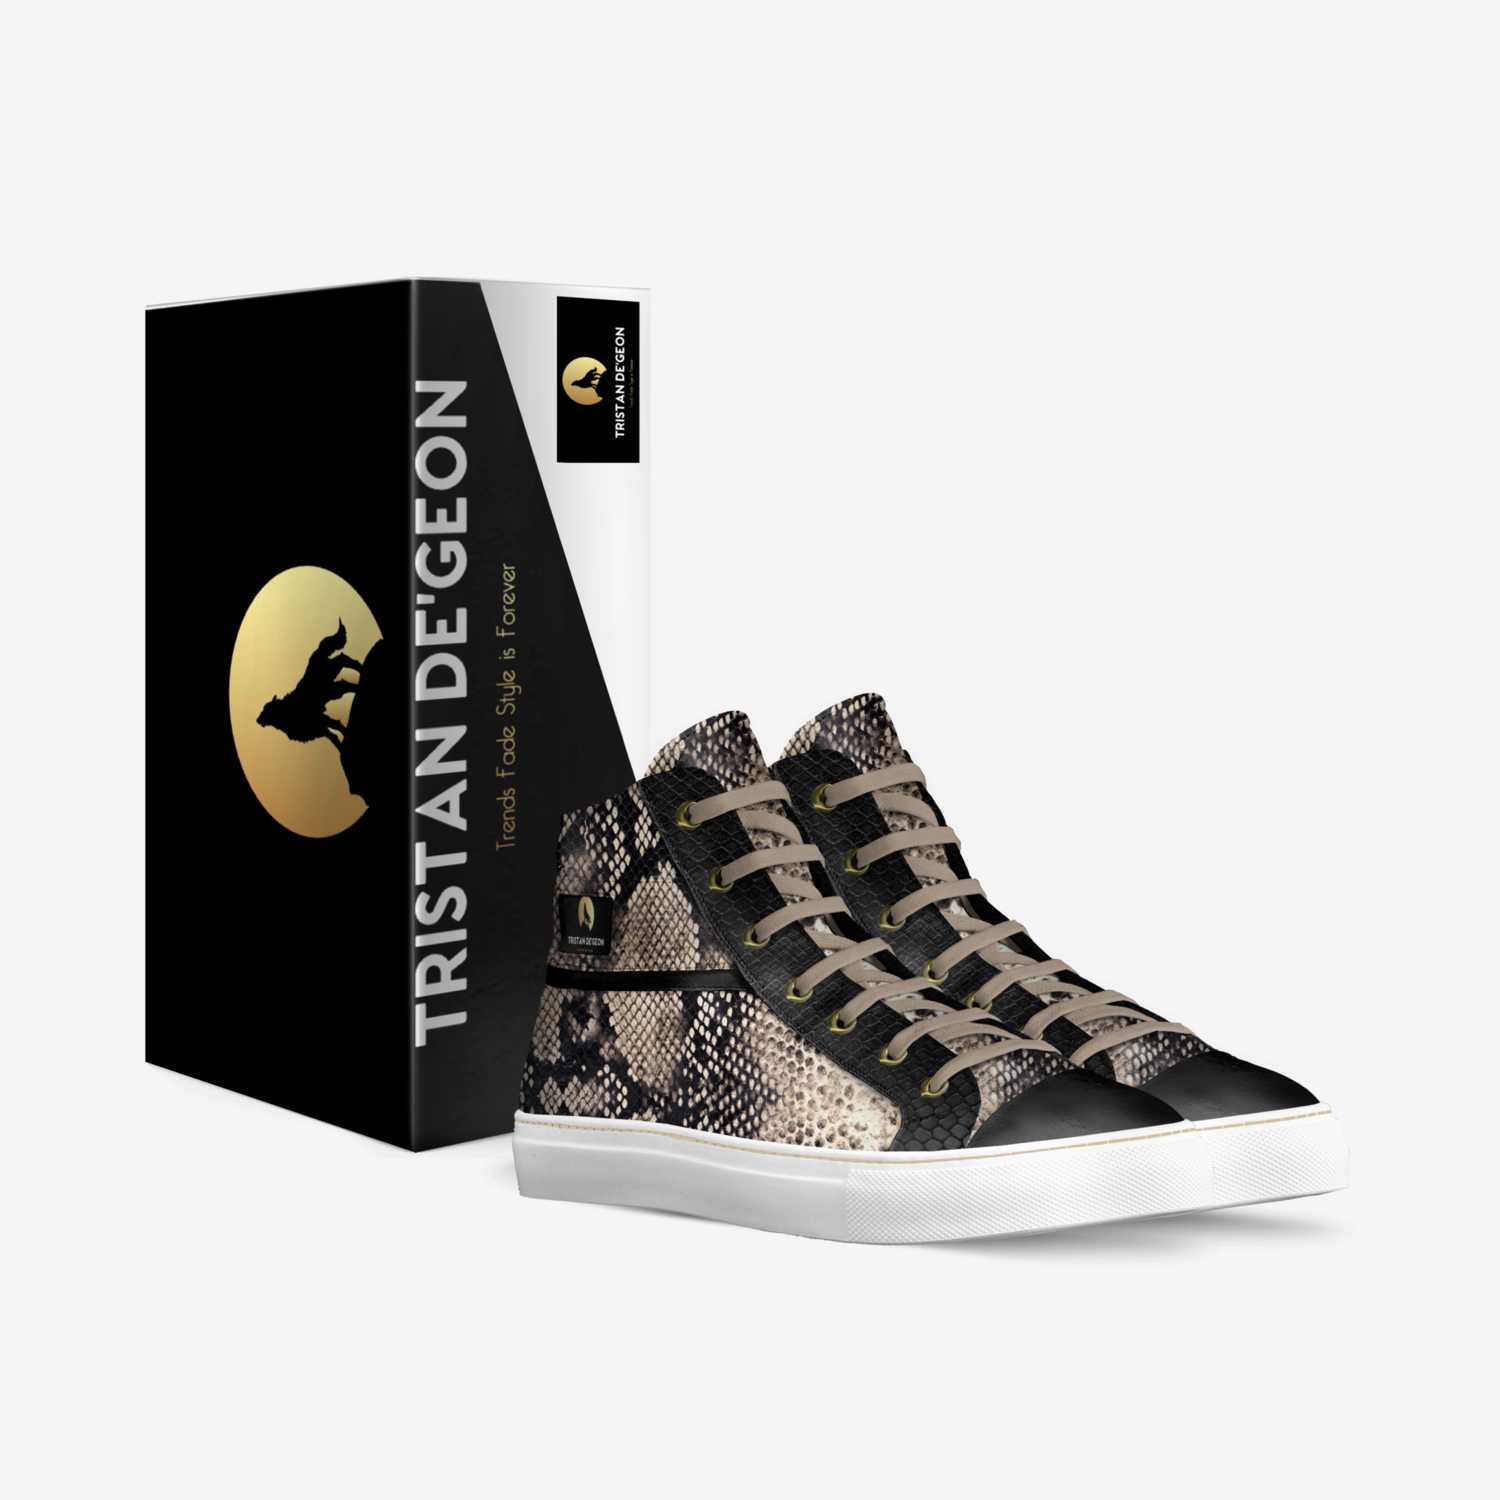 Tristan De'Geon custom made in Italy shoes by Tristan De'Geon | Box view